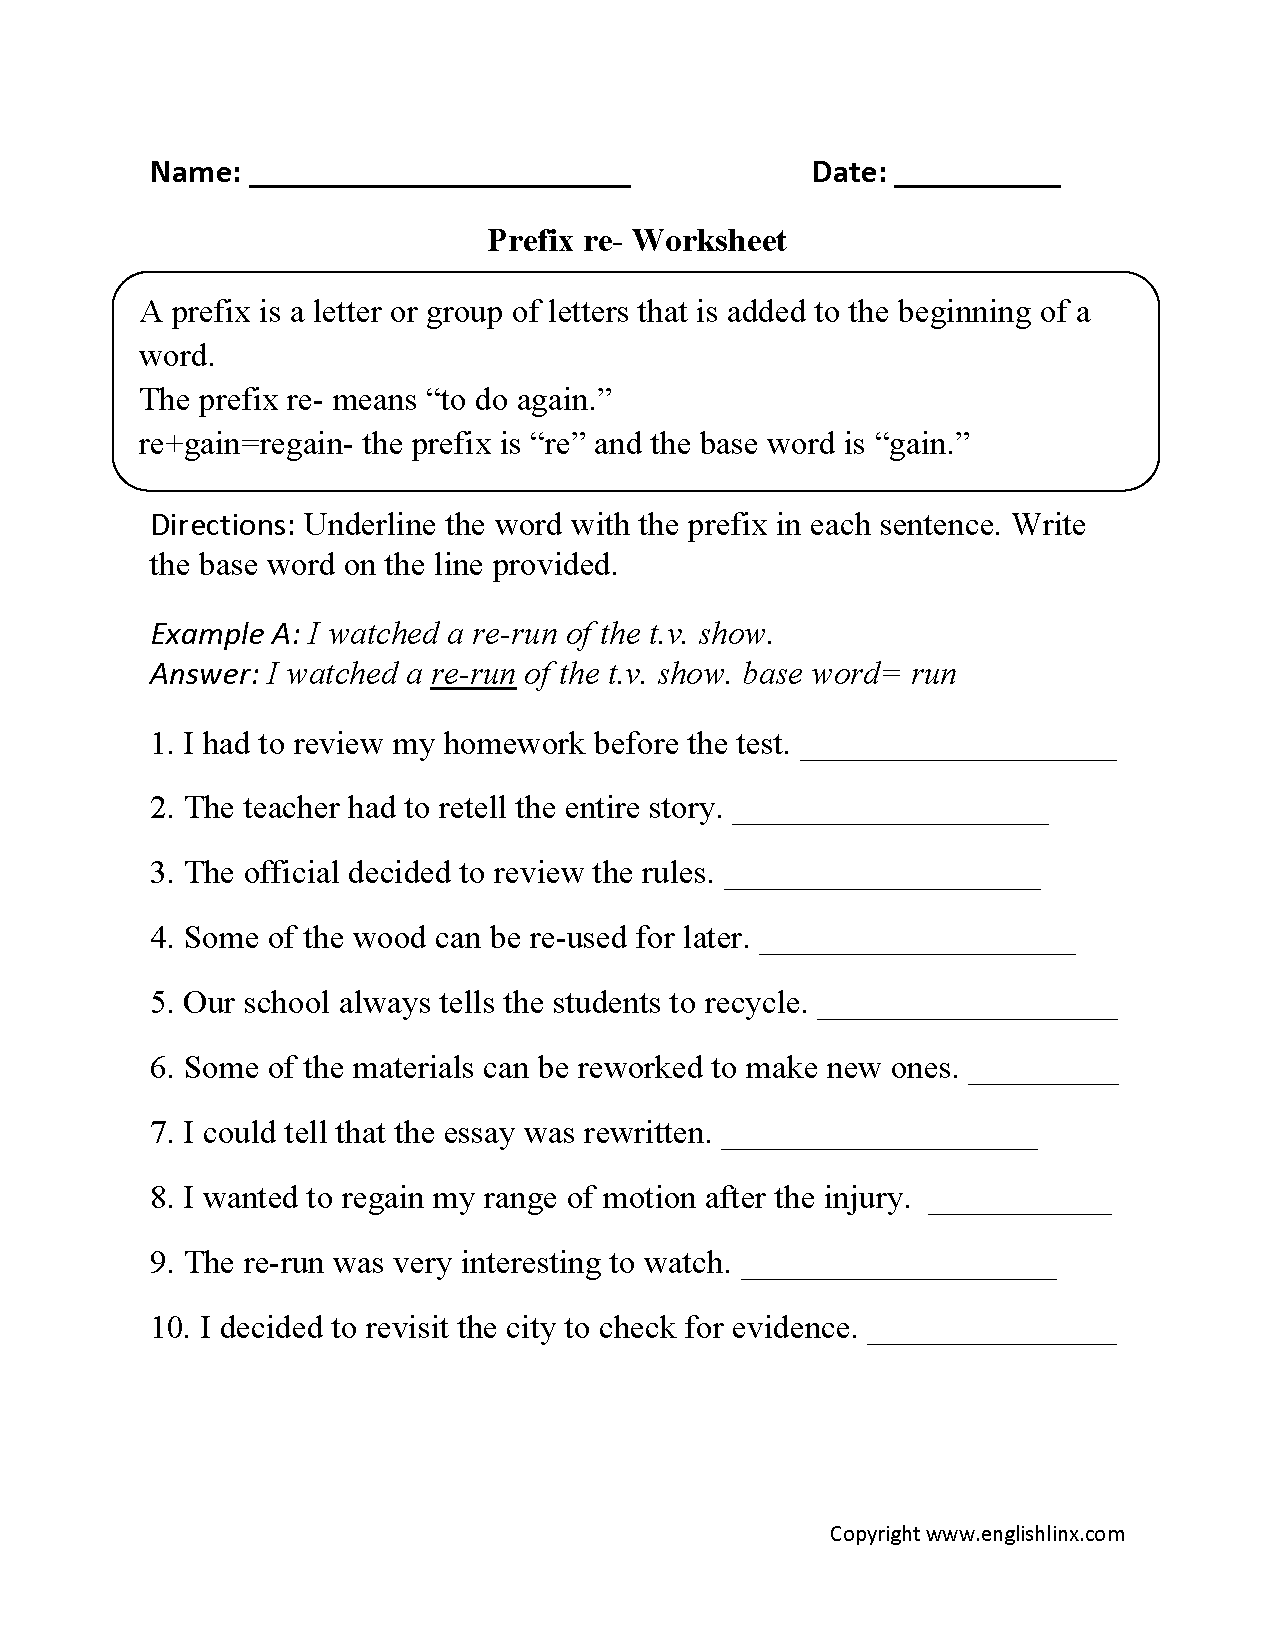 Prefixes Worksheets | Prefix re- Worksheet